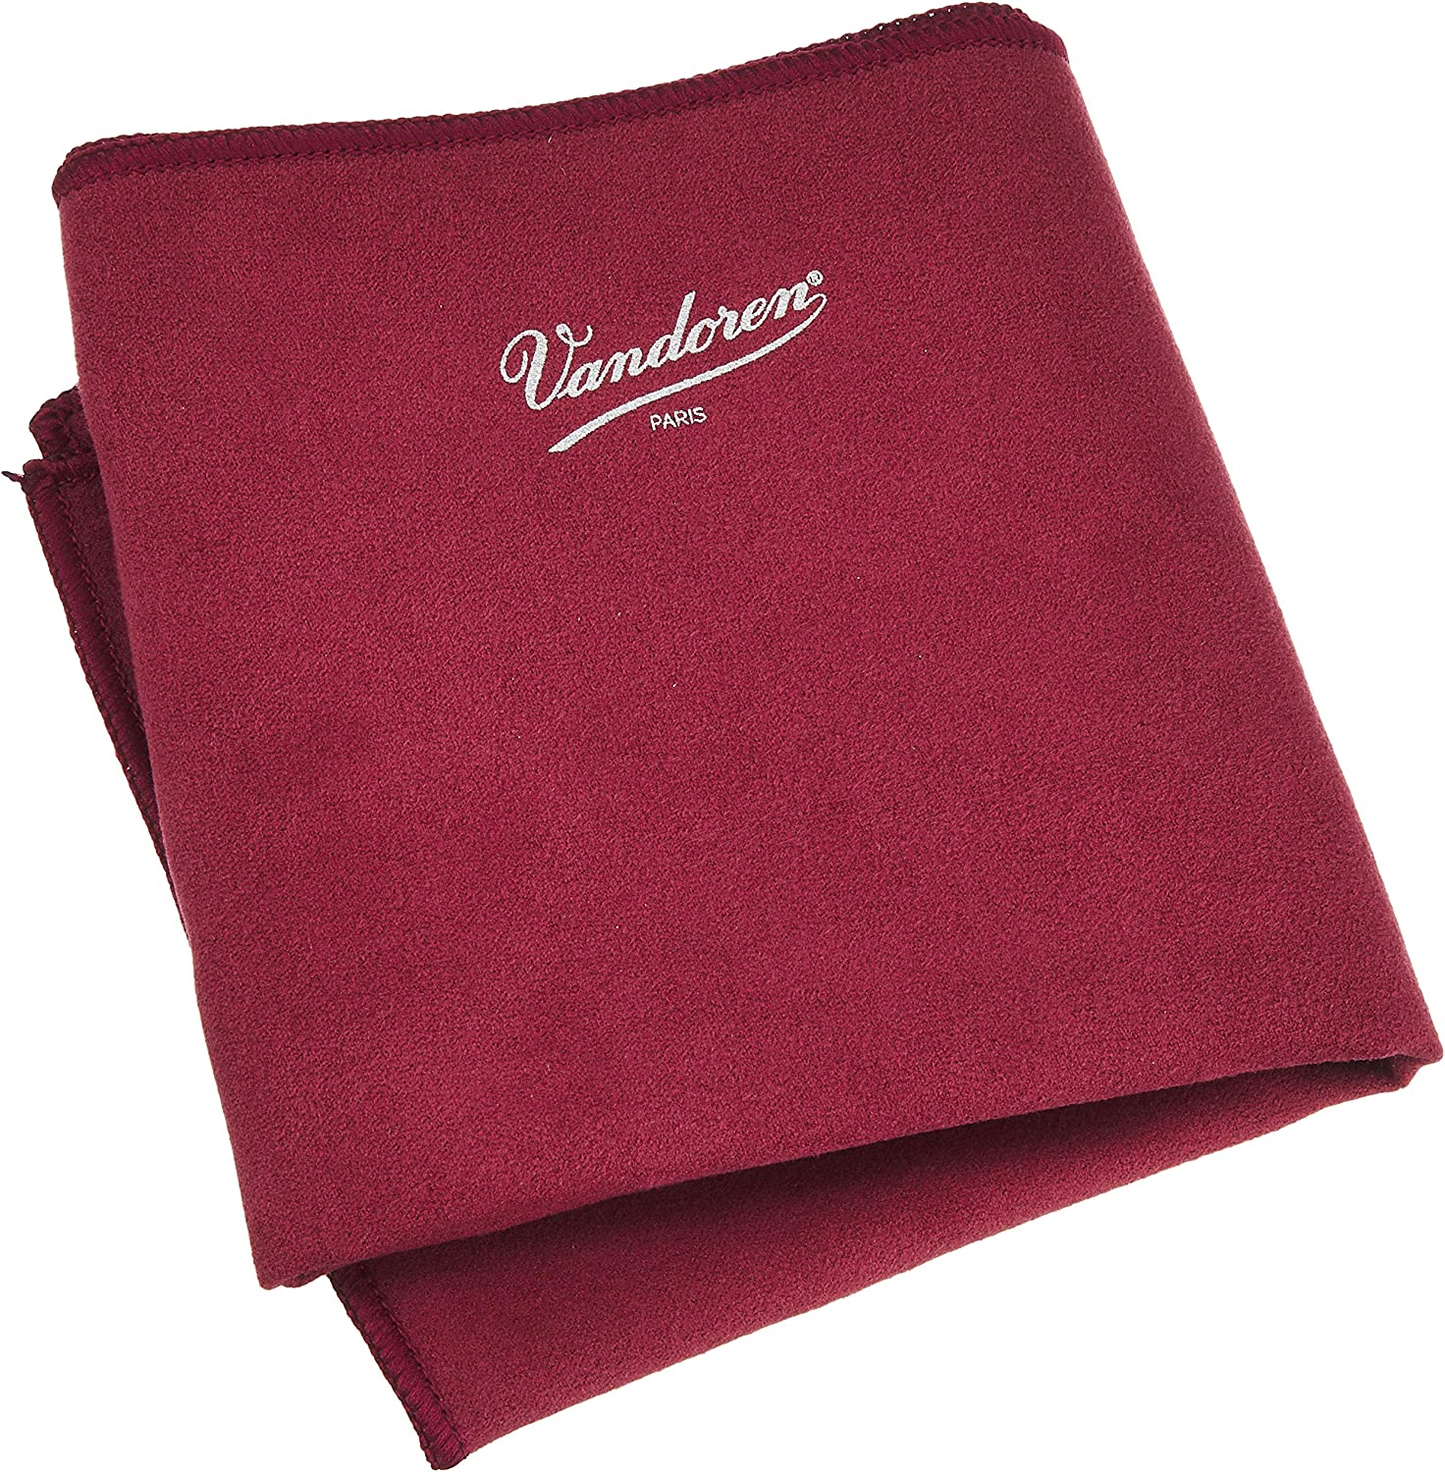 Vandoren Microfiber Polishing Cloth - PC300 - Premium Polish Cloth from Vandoren - Just $17.90! Shop now at Poppa's Music